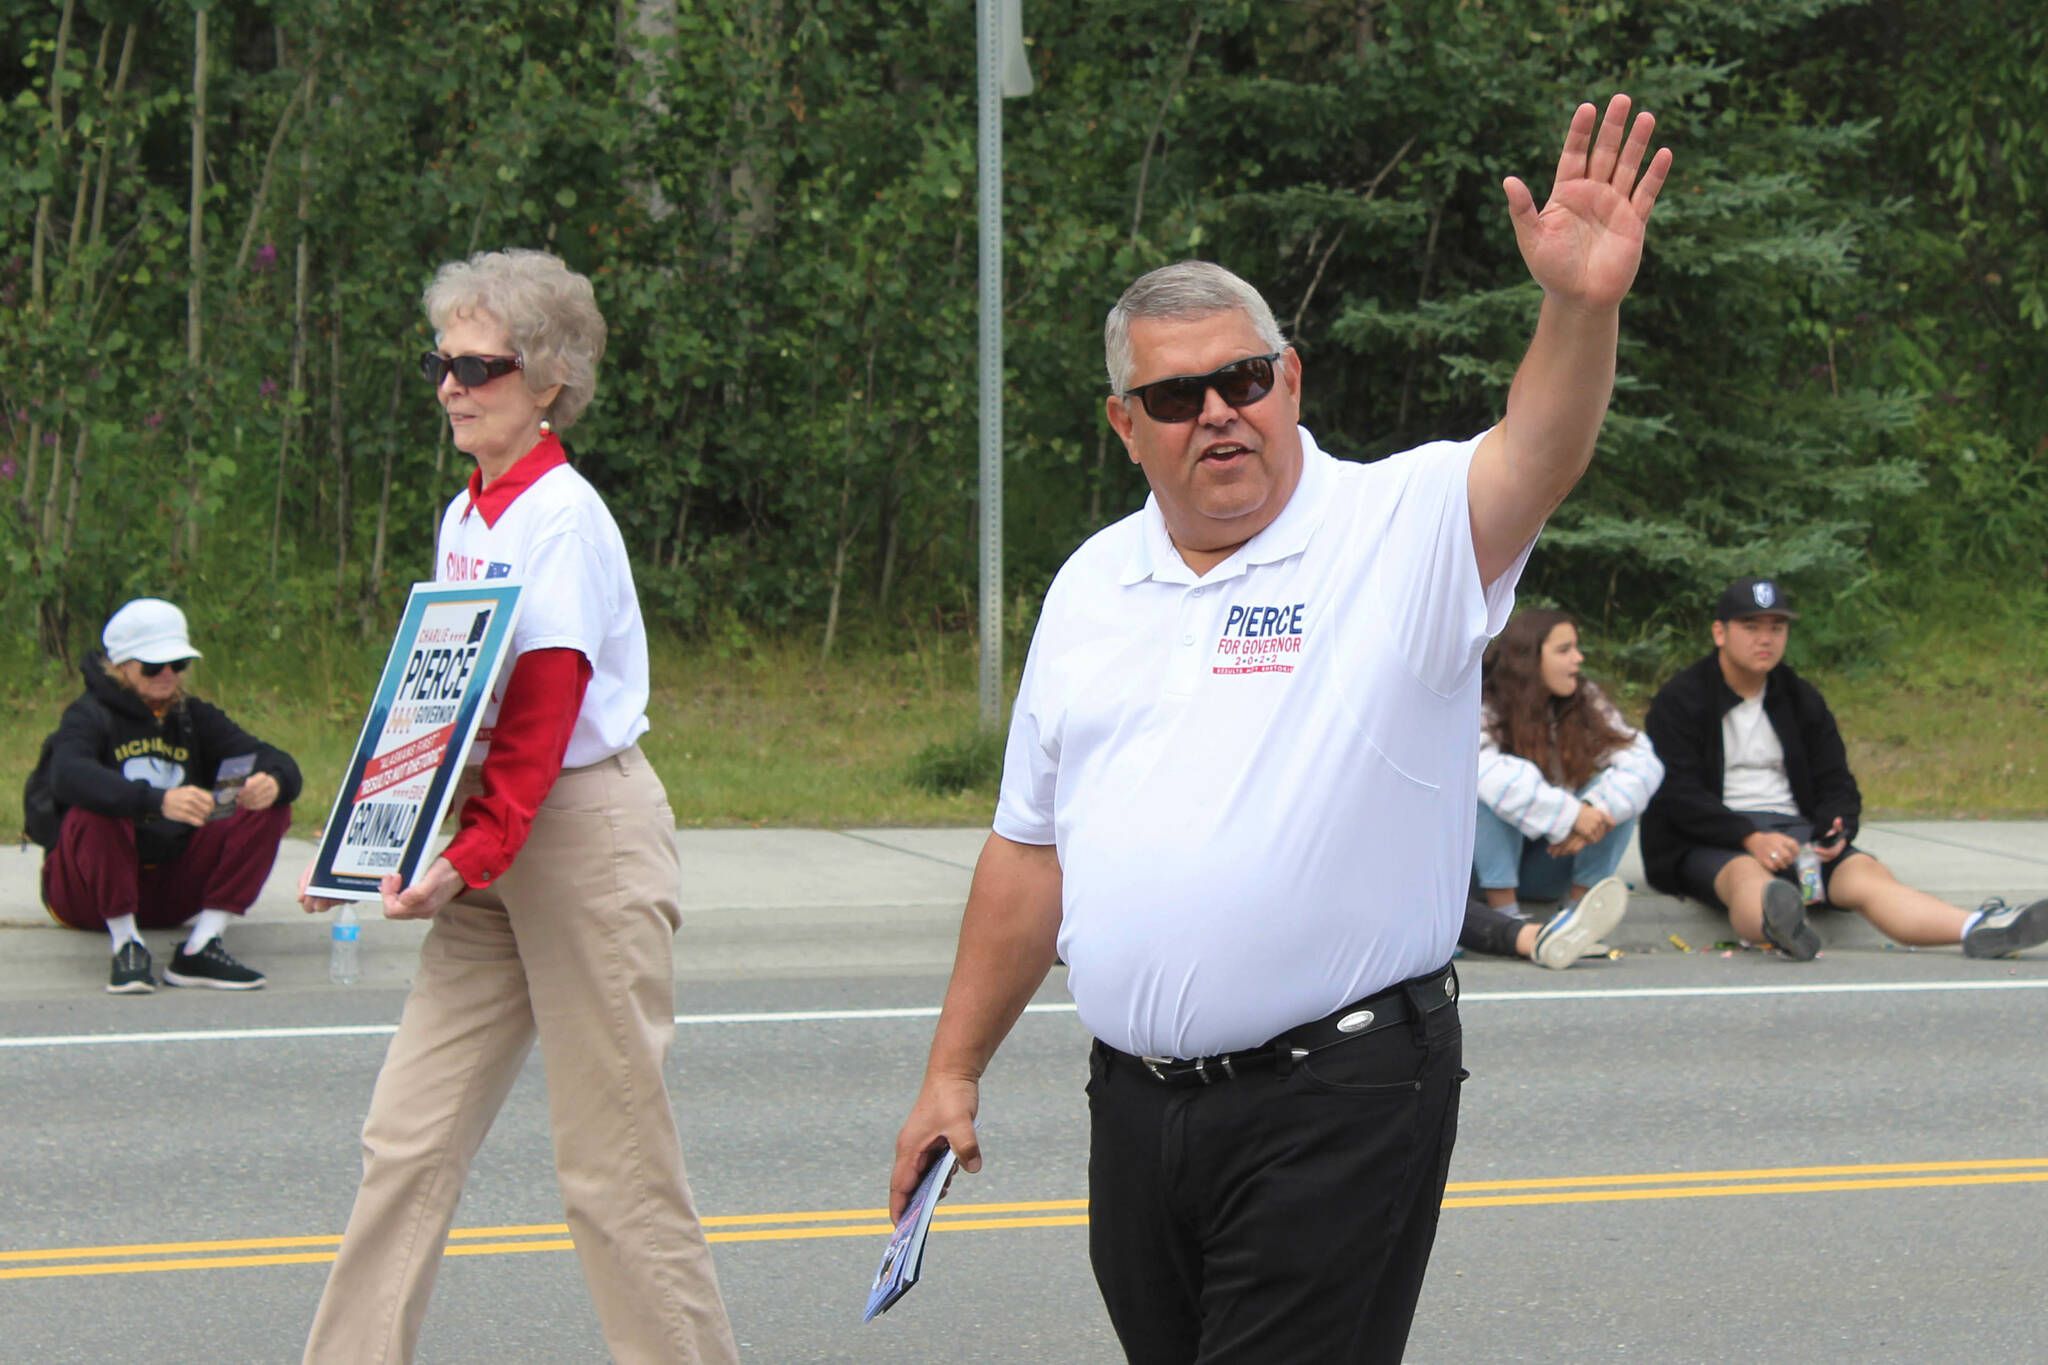 2022 gubernatorial candidate Charlie Pierce walks in the 65th annual Soldotna Progress Days Parade on Saturday, July 23, 2022 in Soldotna, Alaska. (Ashlyn O’Hara/Peninsula Clarion)